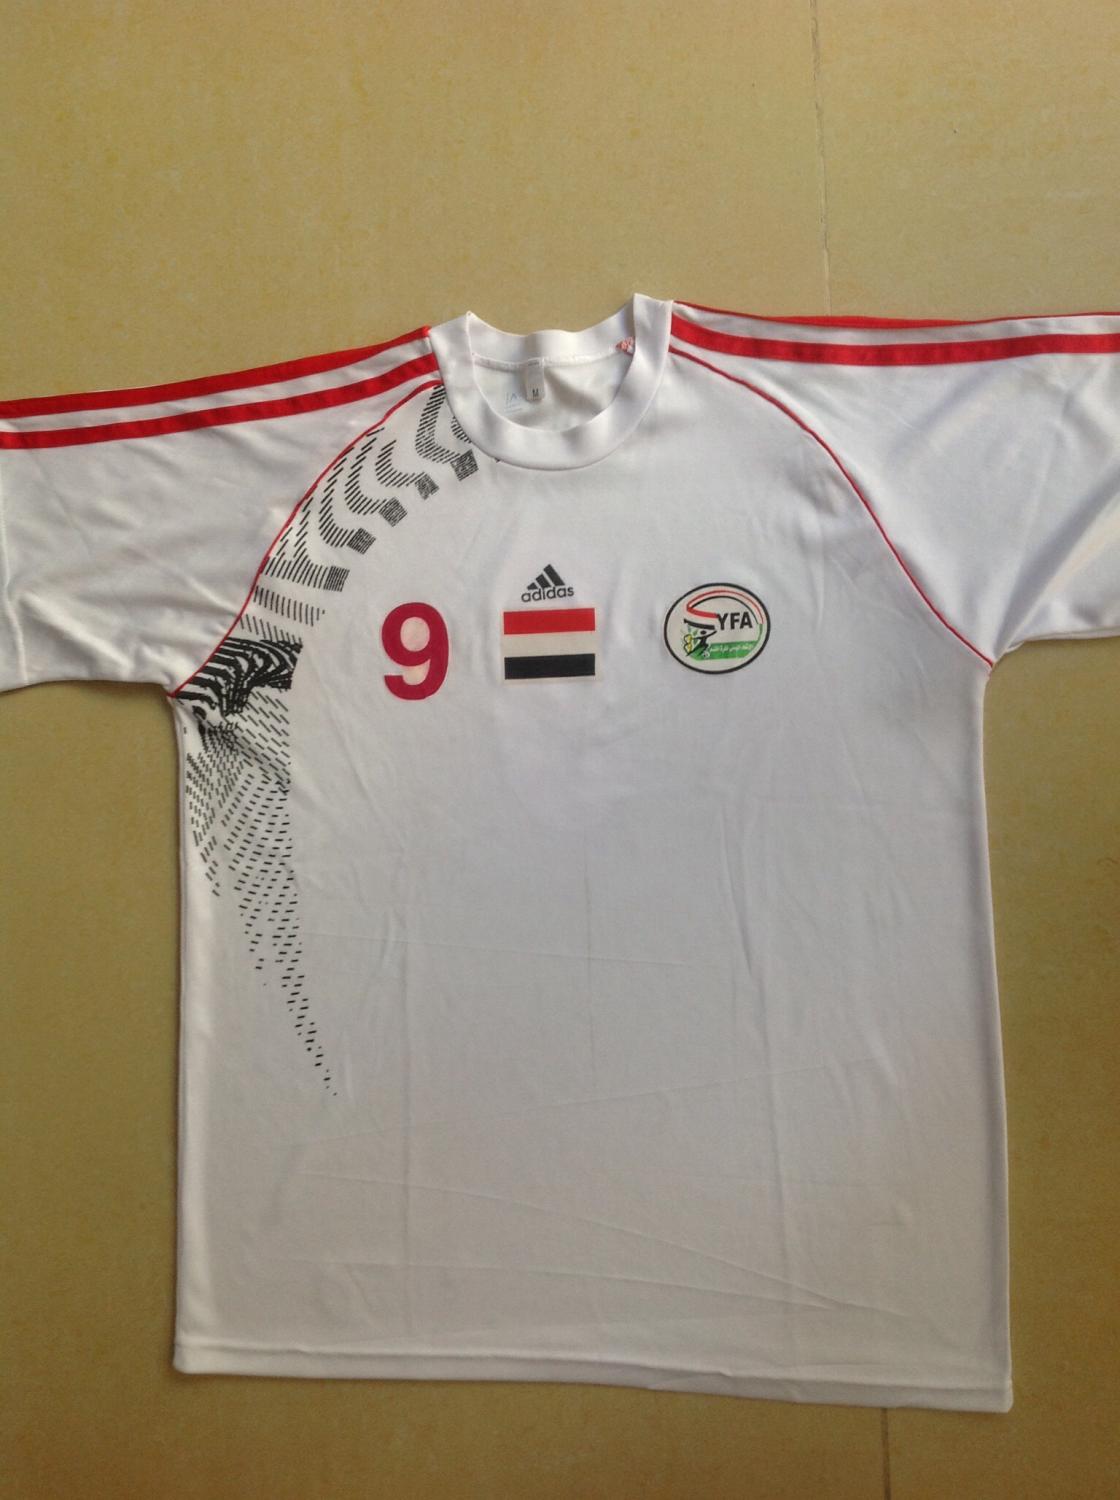 yemen national football team jersey